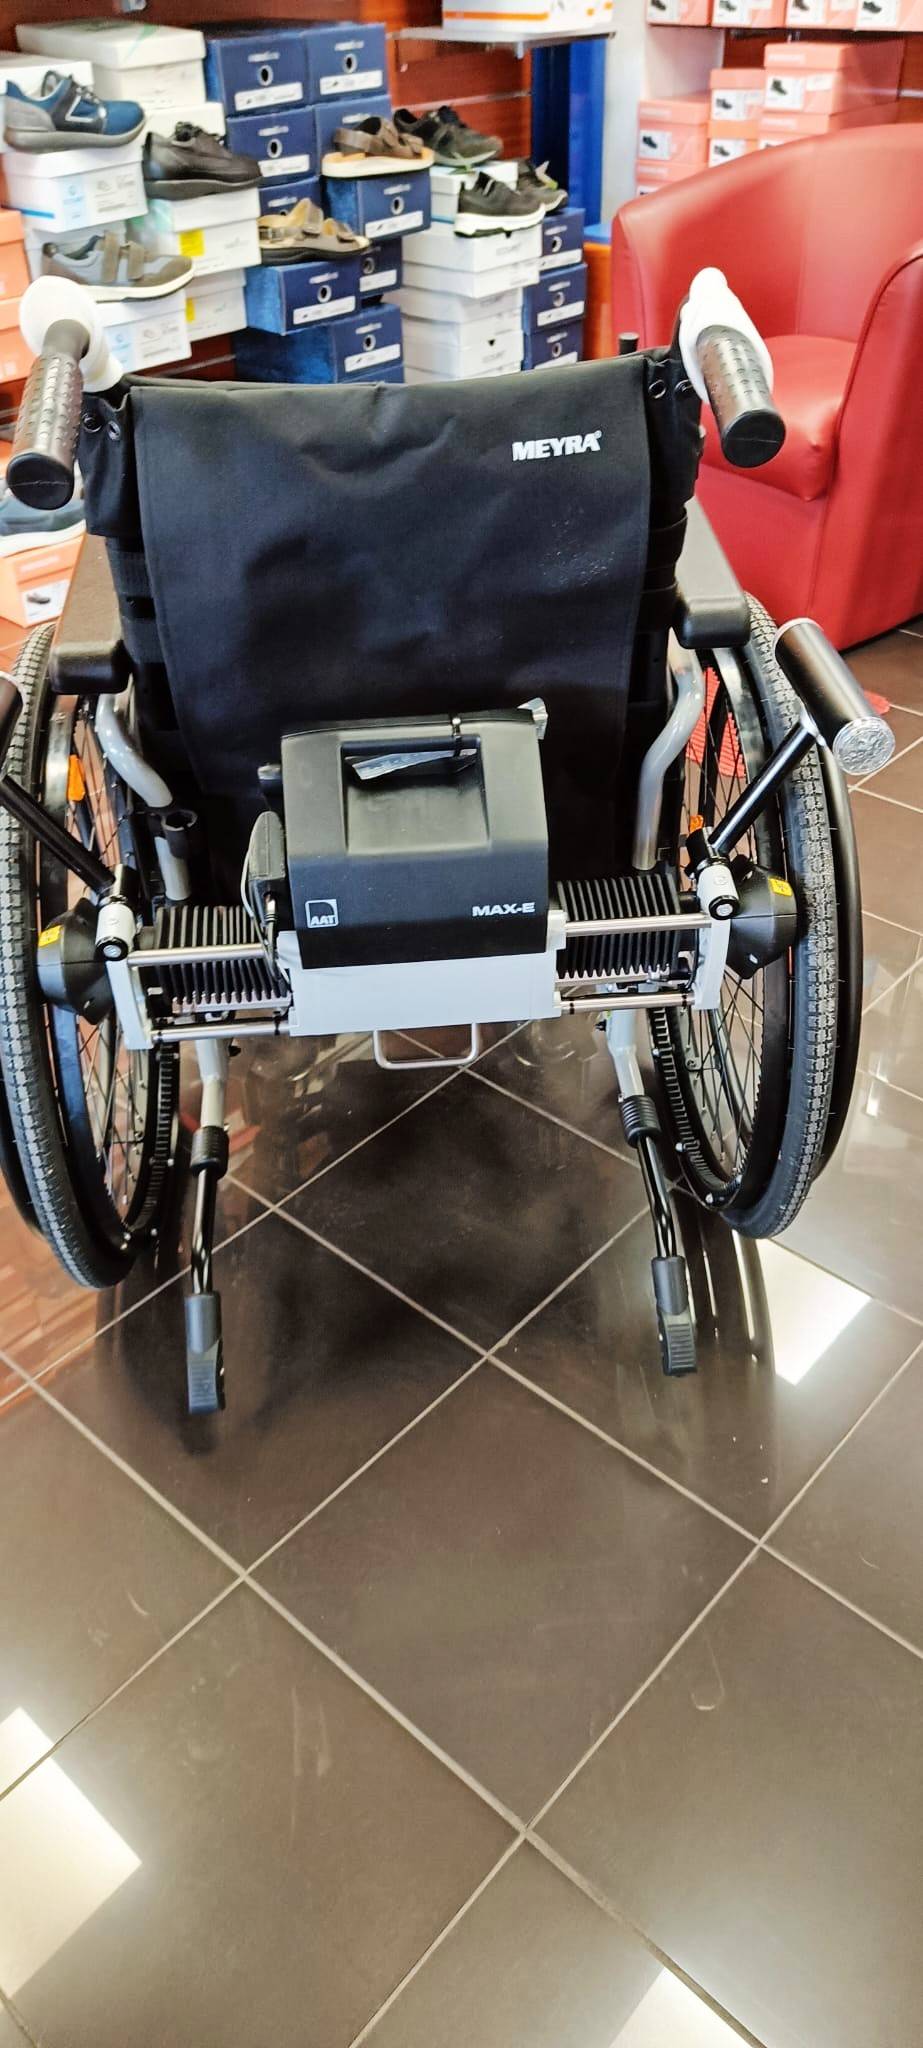 OTR Ortopedia - sezione mobility - wheelchairs - disability - carrozzina superleggera - Sassari